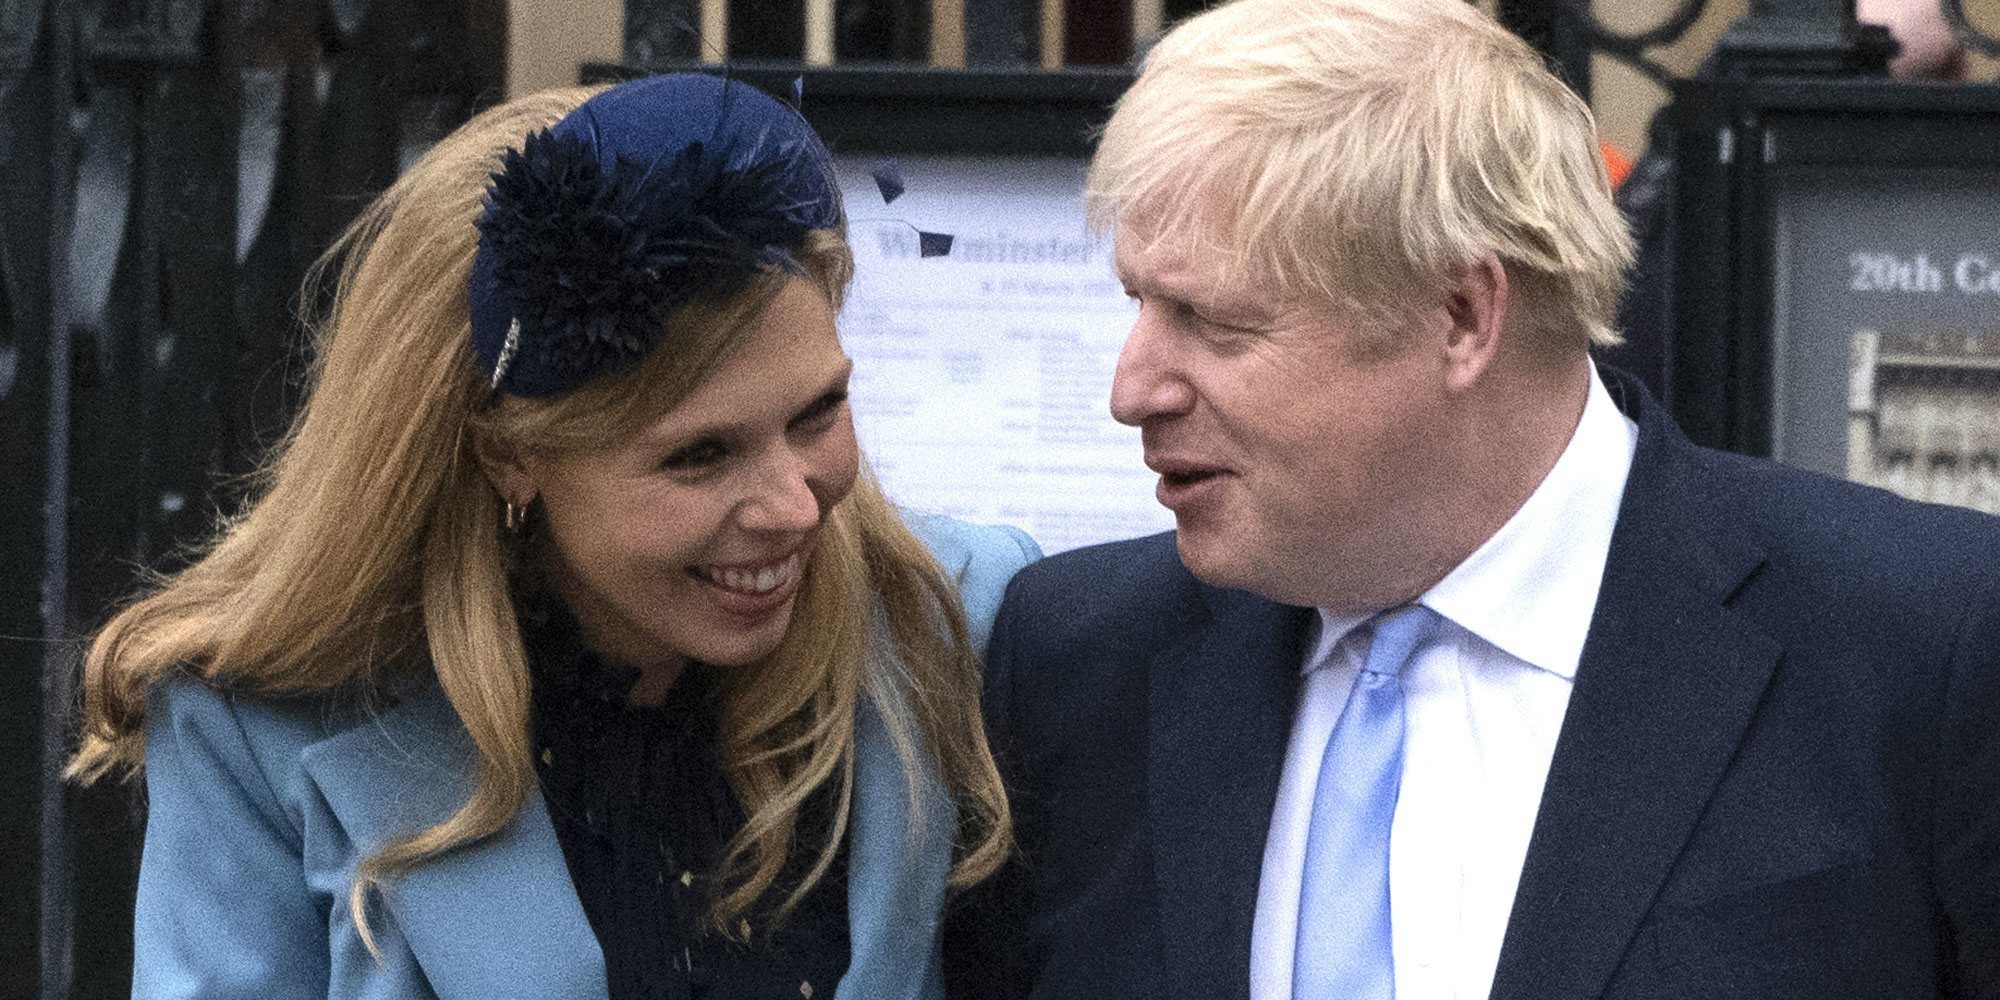 Carrie Symonds, prometida de Boris Johnson, también tiene coronavirus durante su embarazo